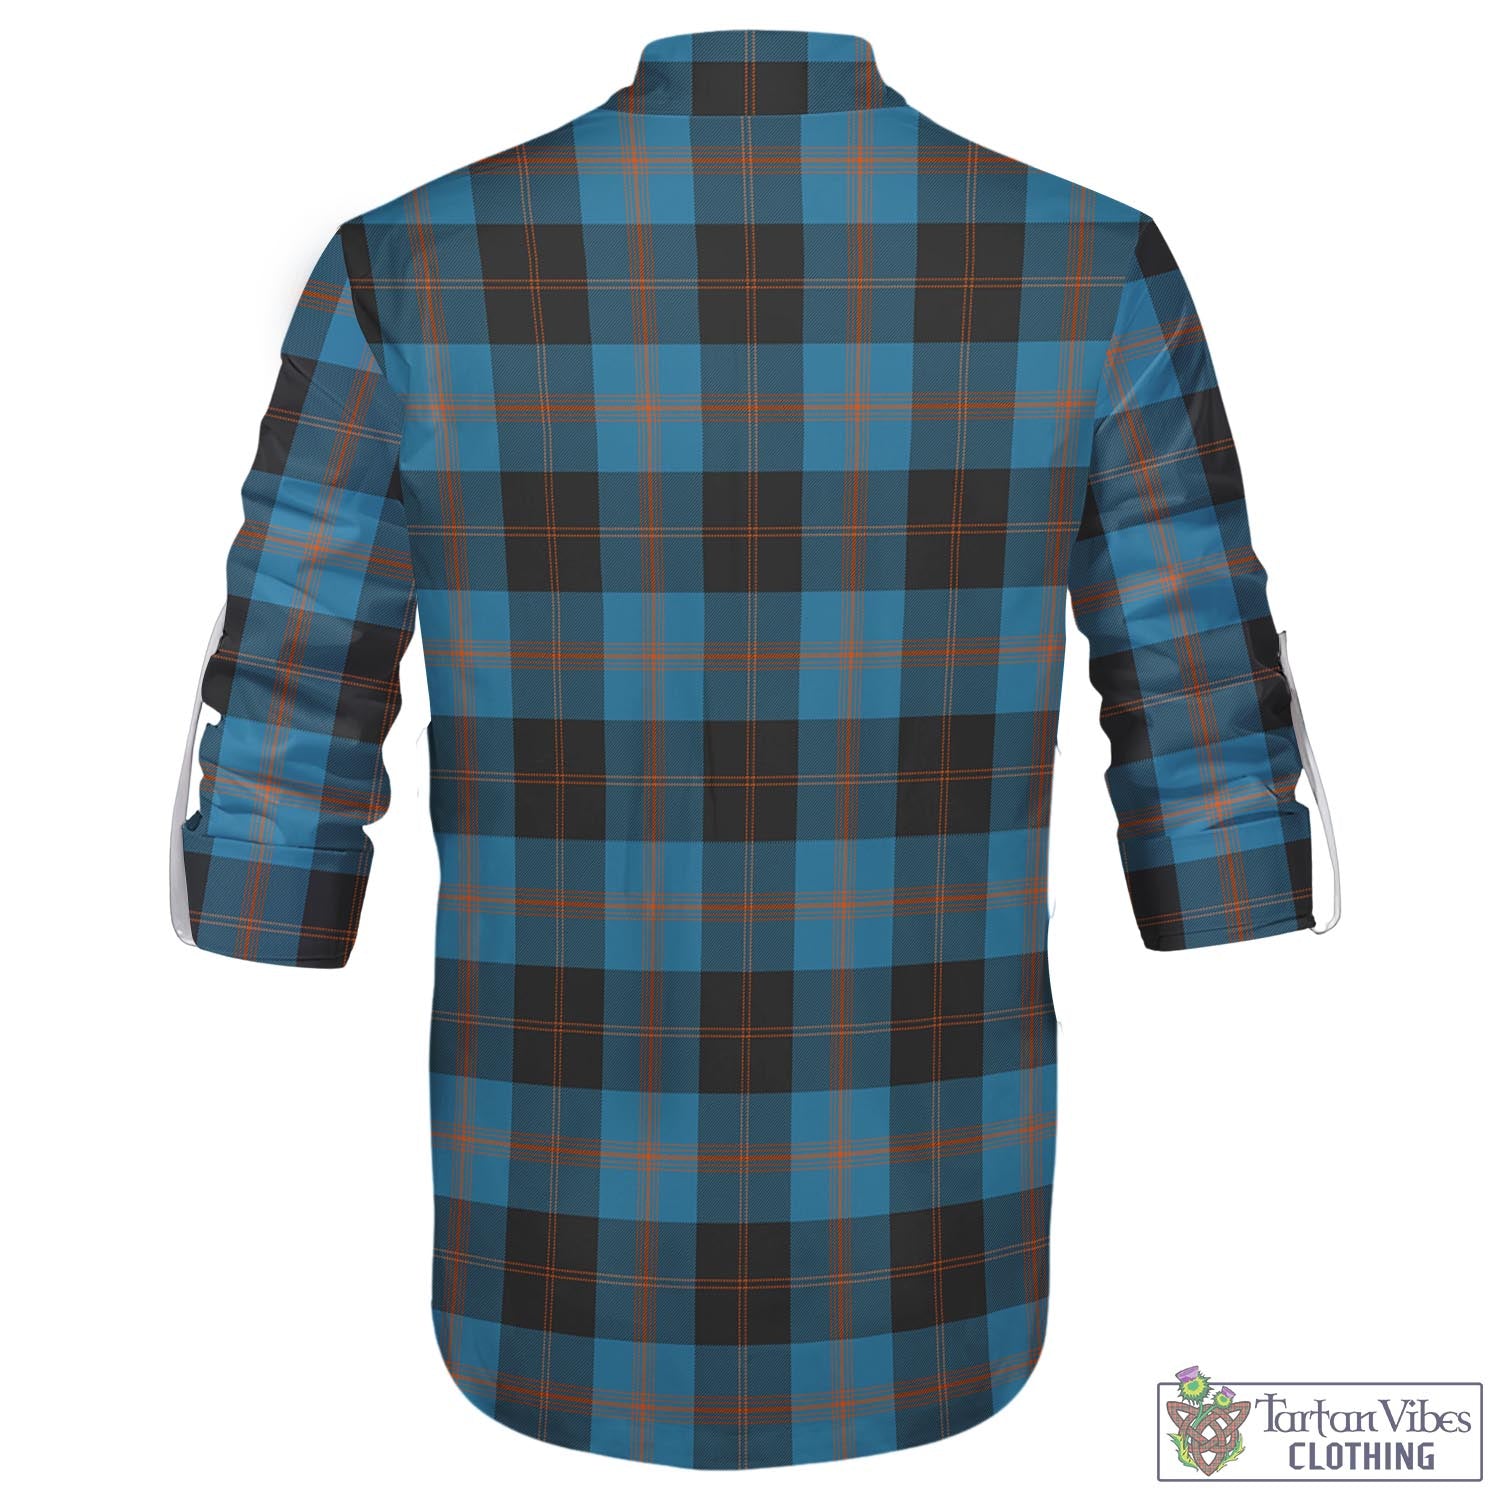 Tartan Vibes Clothing Horsburgh Tartan Men's Scottish Traditional Jacobite Ghillie Kilt Shirt with Family Crest